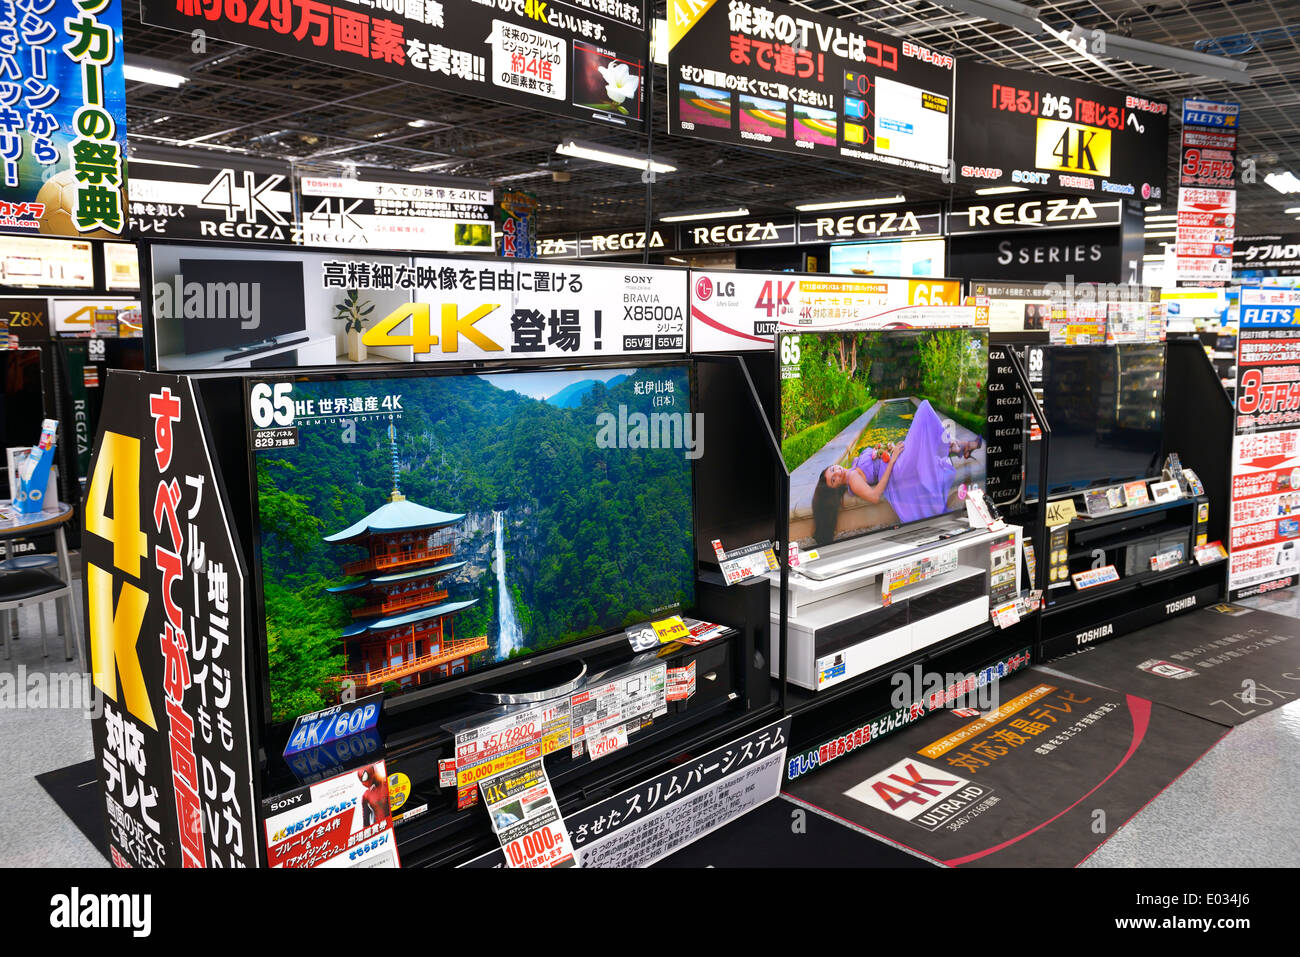 SONY BRAVIA 4K 65 inch LCD TV X8500A in electronics store Yodobashi Camera, Yodobashi-Akiba in Akihabara, Tokyo, Japan. Stock Photo